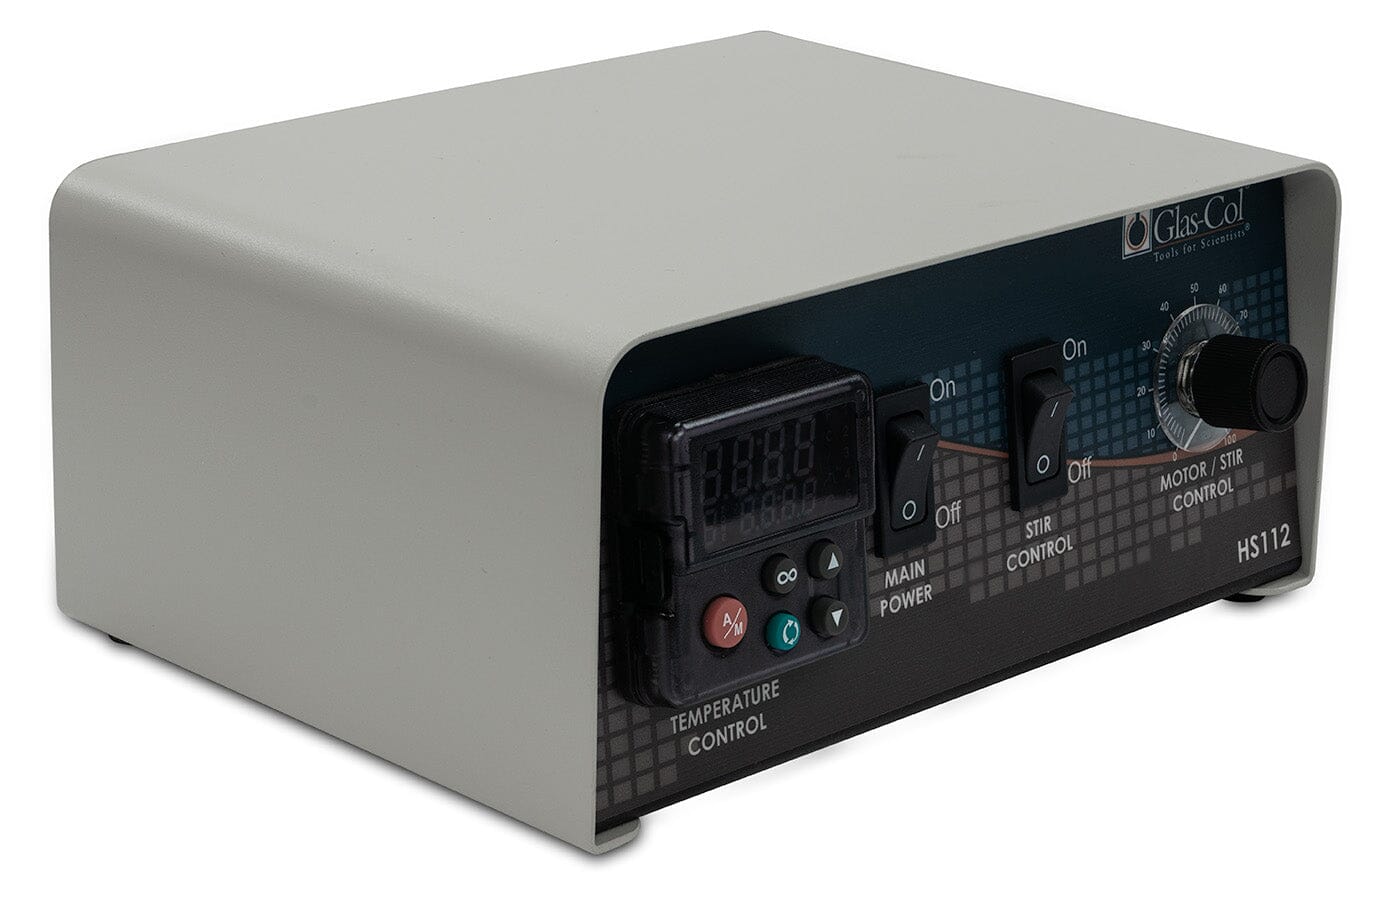 Glas-Col, Glas-Col Digital Temperature Controller Input 2400W, 120V w/Stir Motor Ctrl